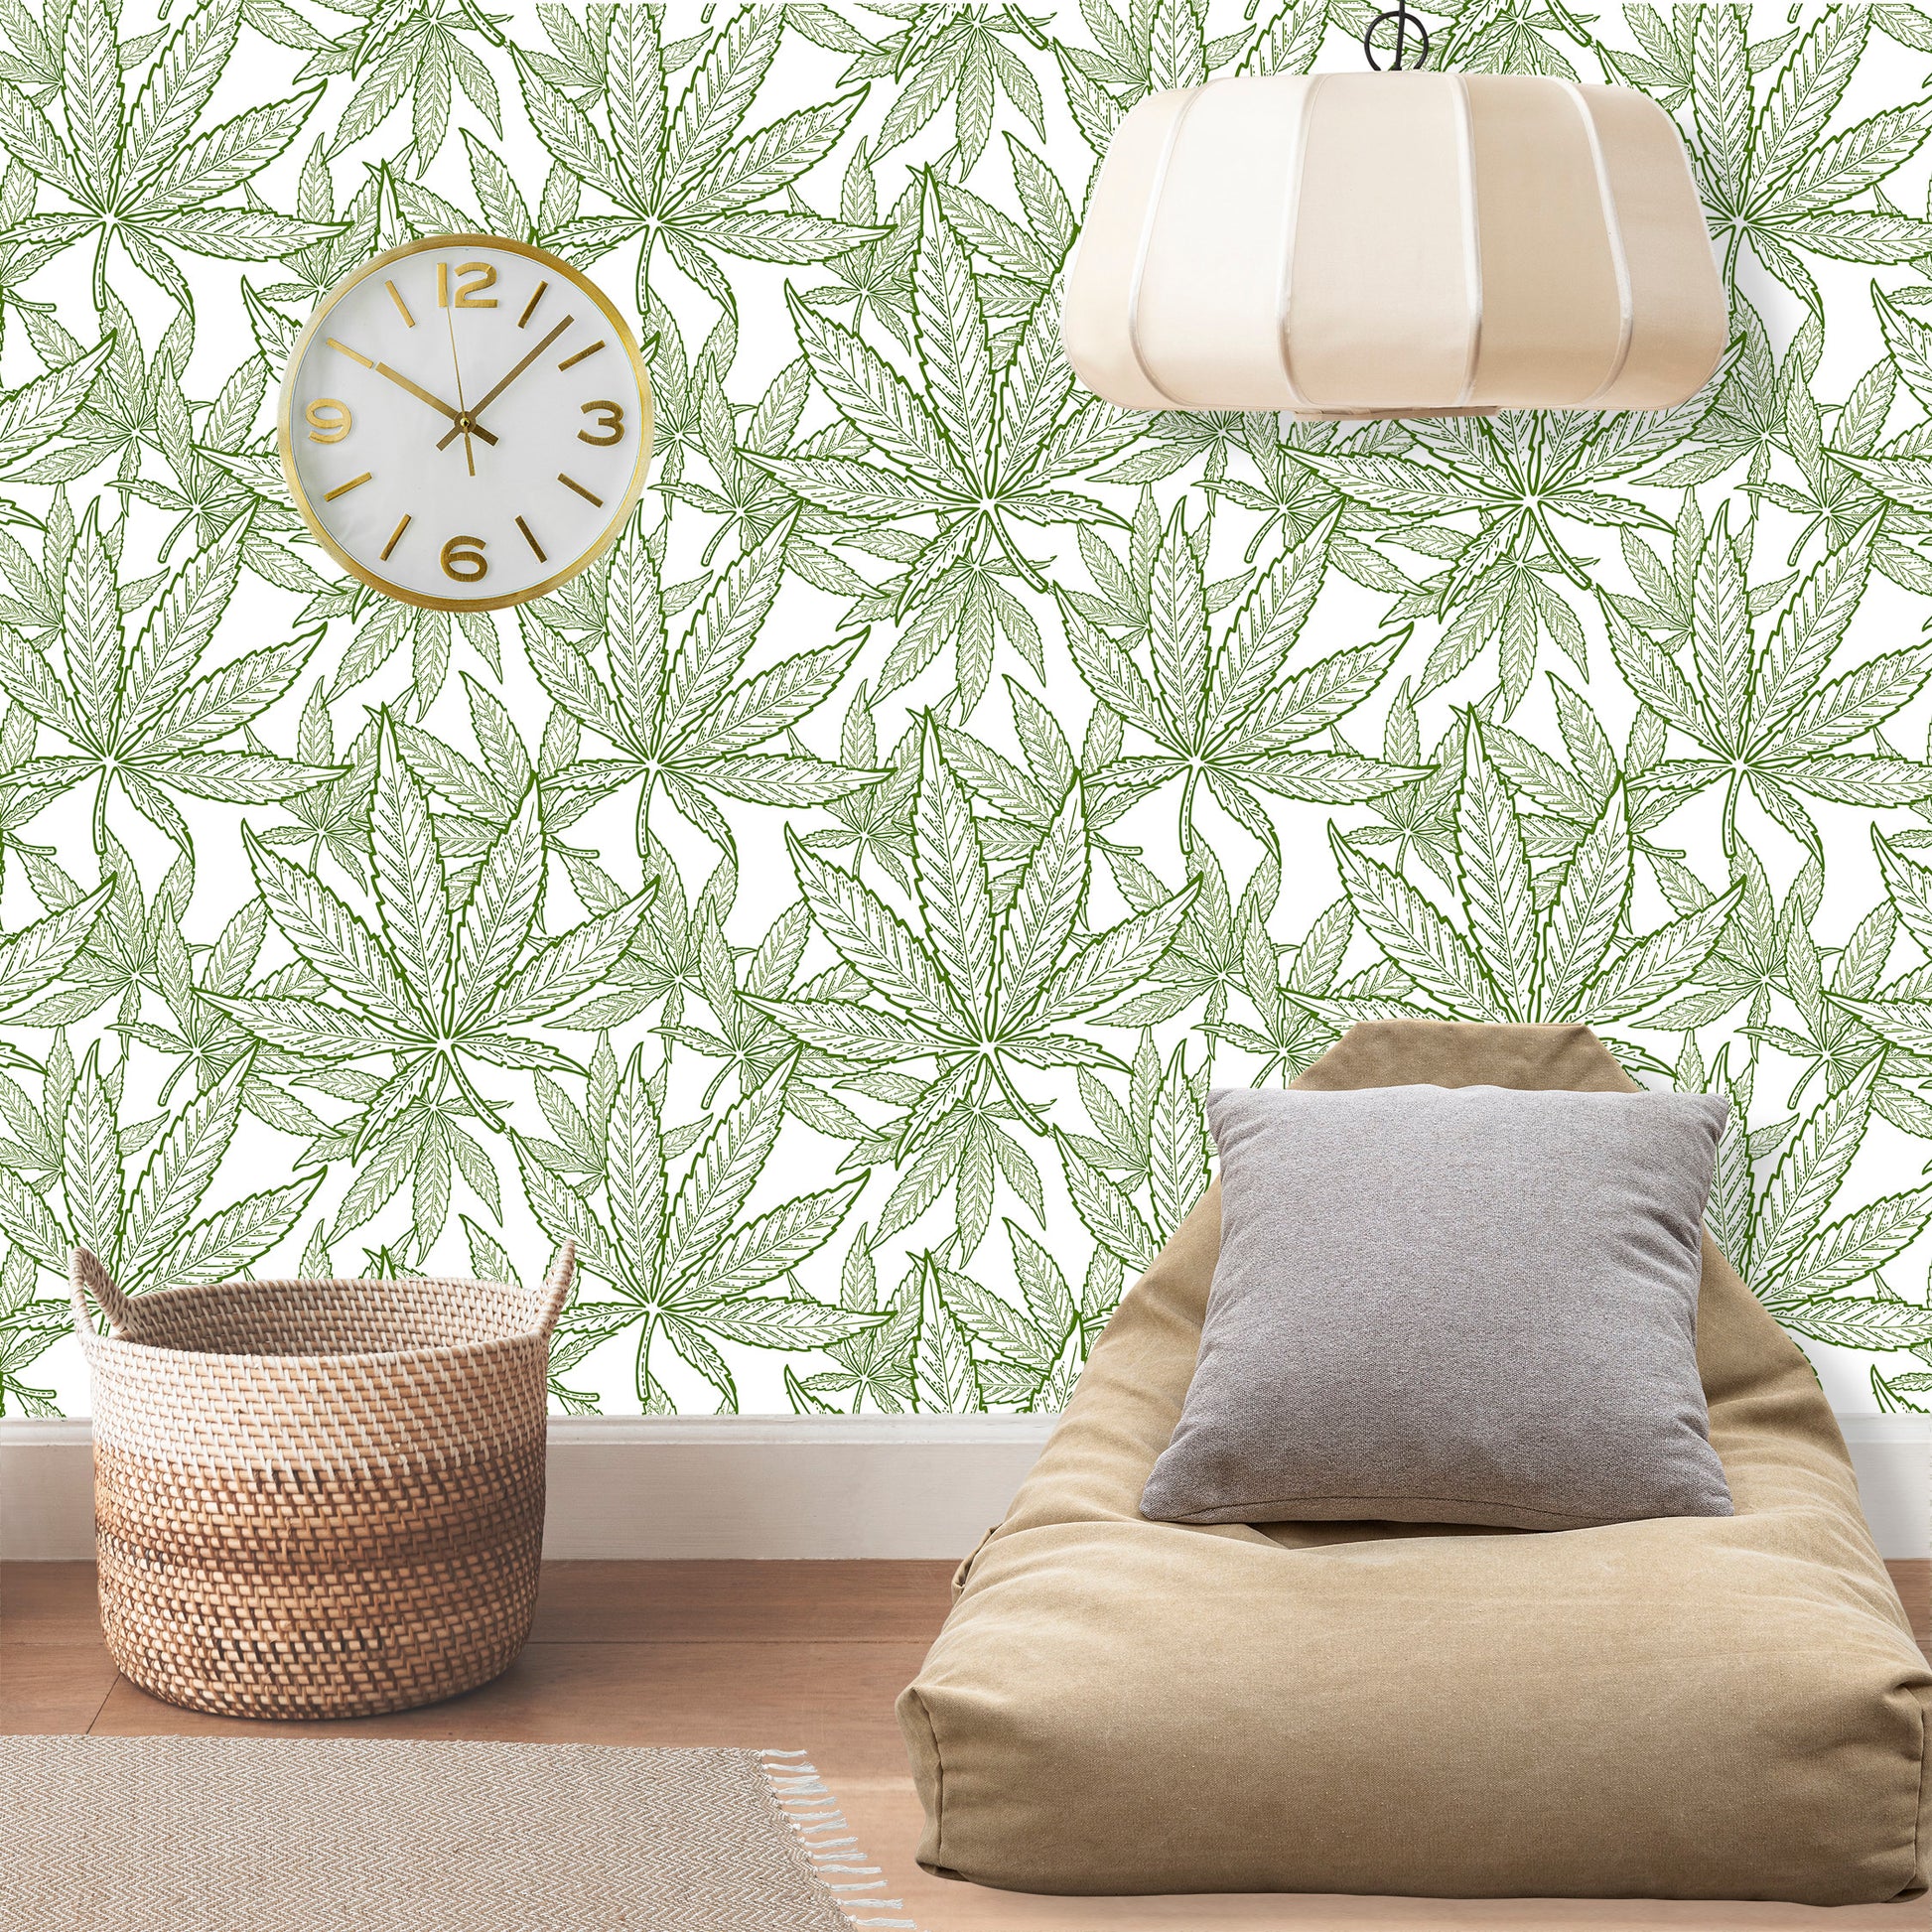 Marijuana Wallpaper Peel and Stick, Hemp Wallpaper, Green Leaf Wallpaper, Exotic Wallpaper, Removable Wall Paper